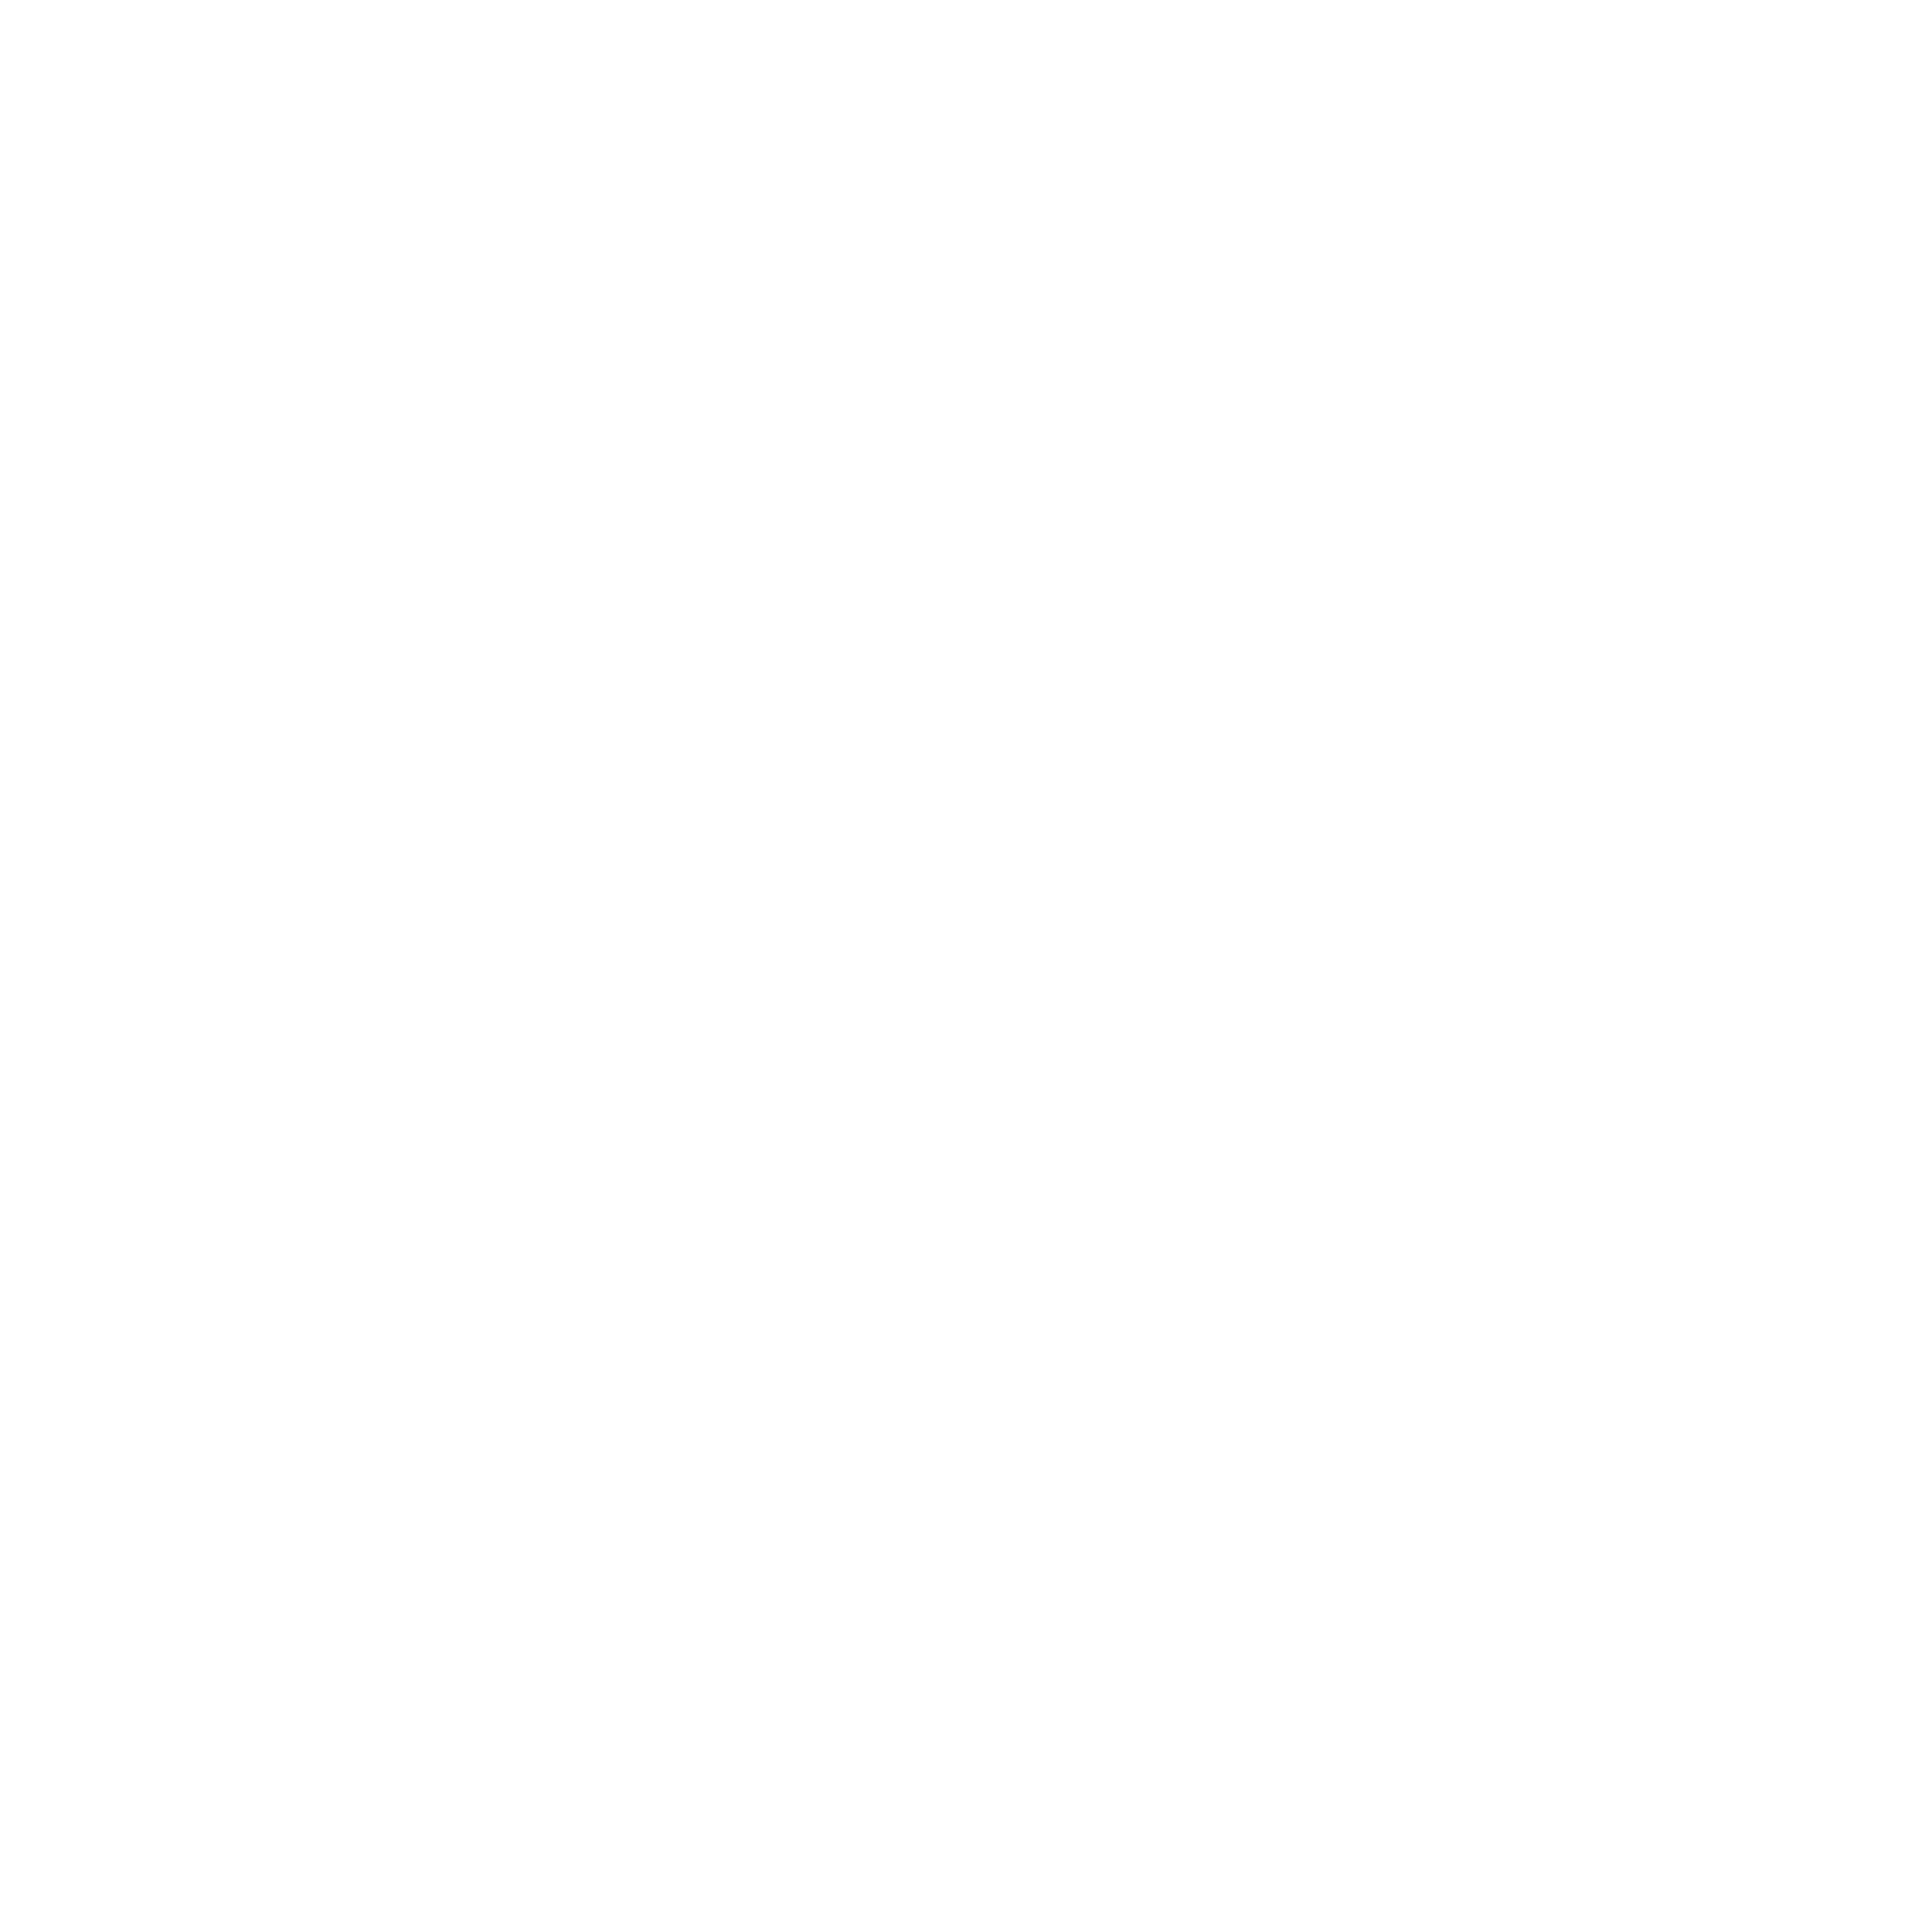 Lithonia Logo - Lithonia Lighting Logo PNG Transparent & SVG Vector - Freebie Supply